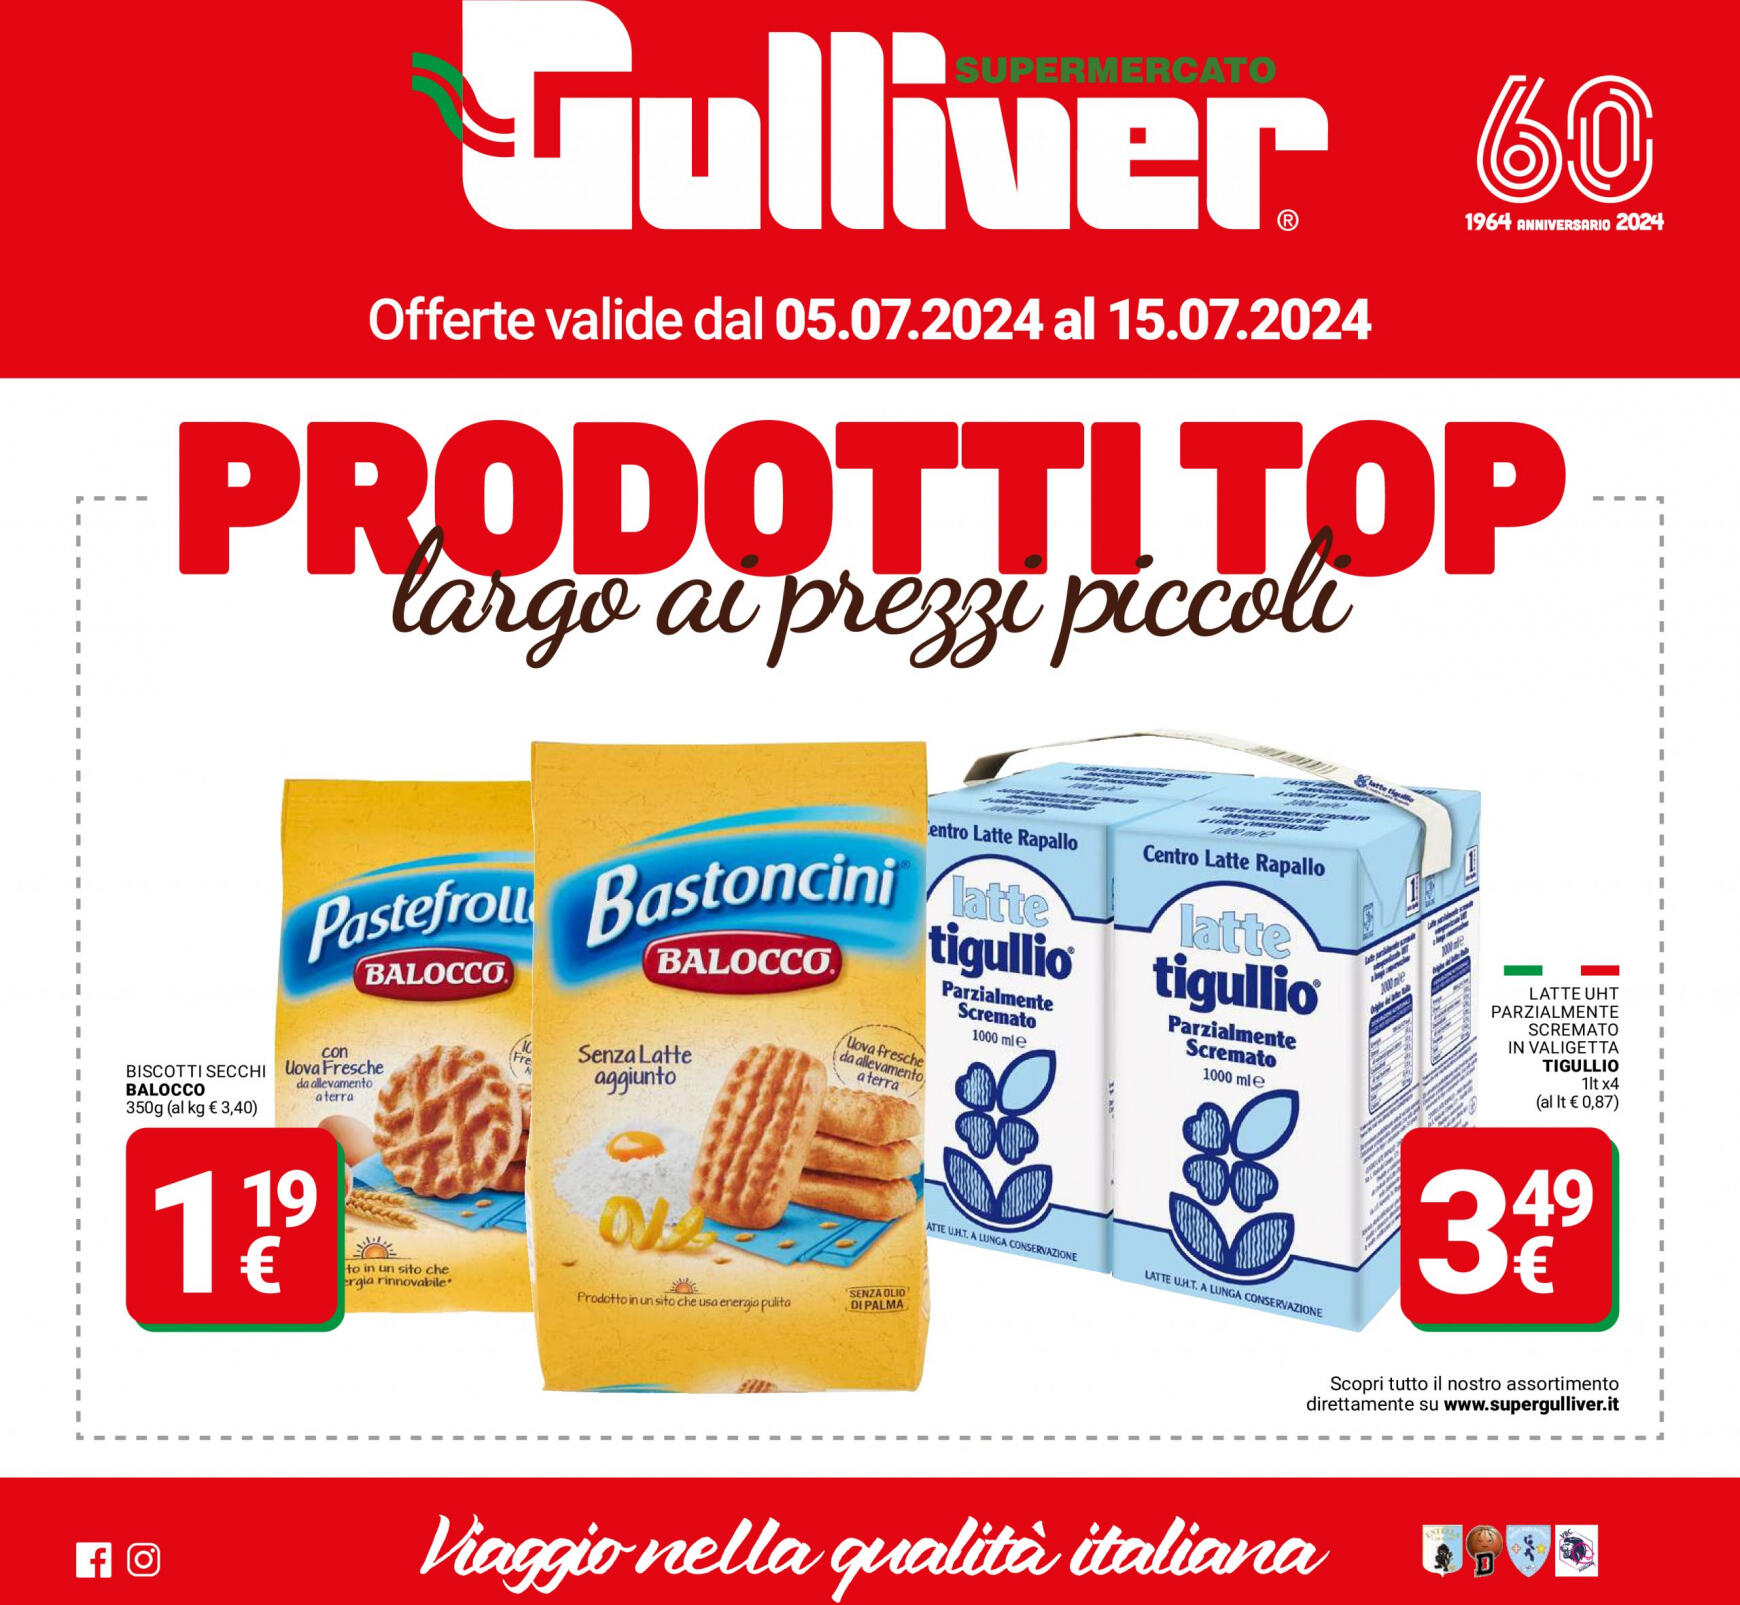 gulliver - Nuovo volantino Gulliver 05.07. - 15.07.